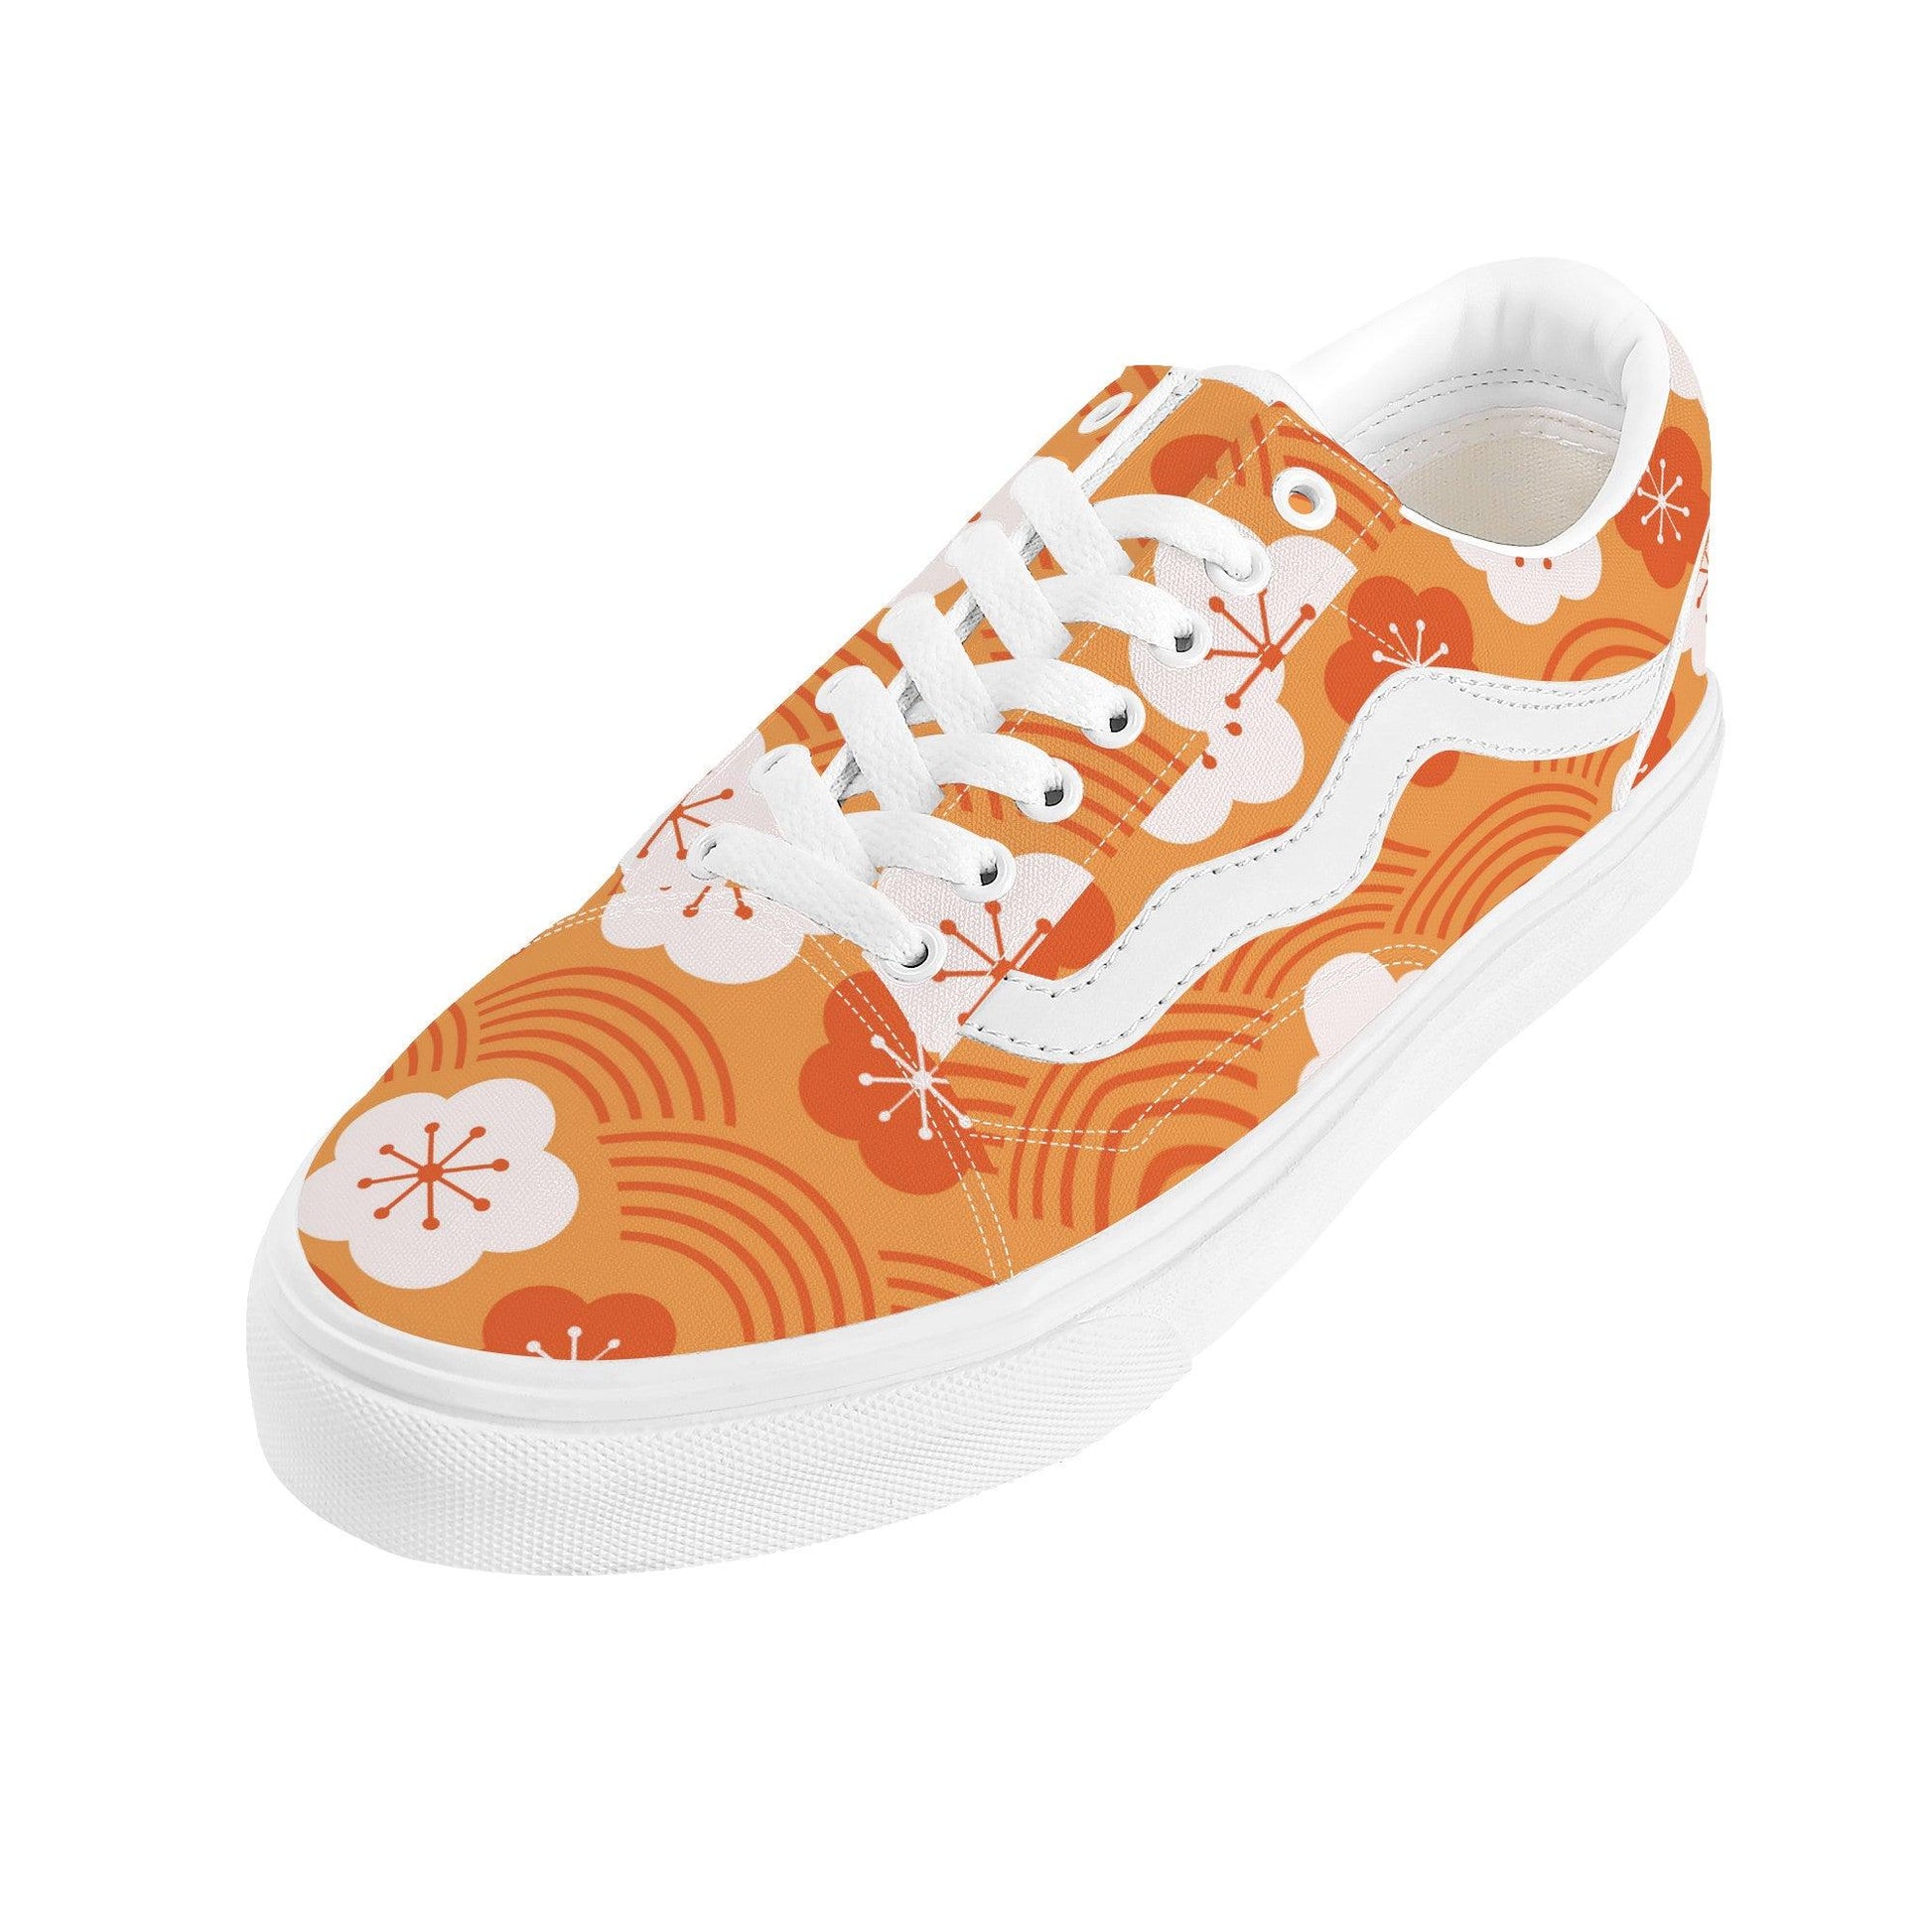 Orange Low Top Flat Sneaker